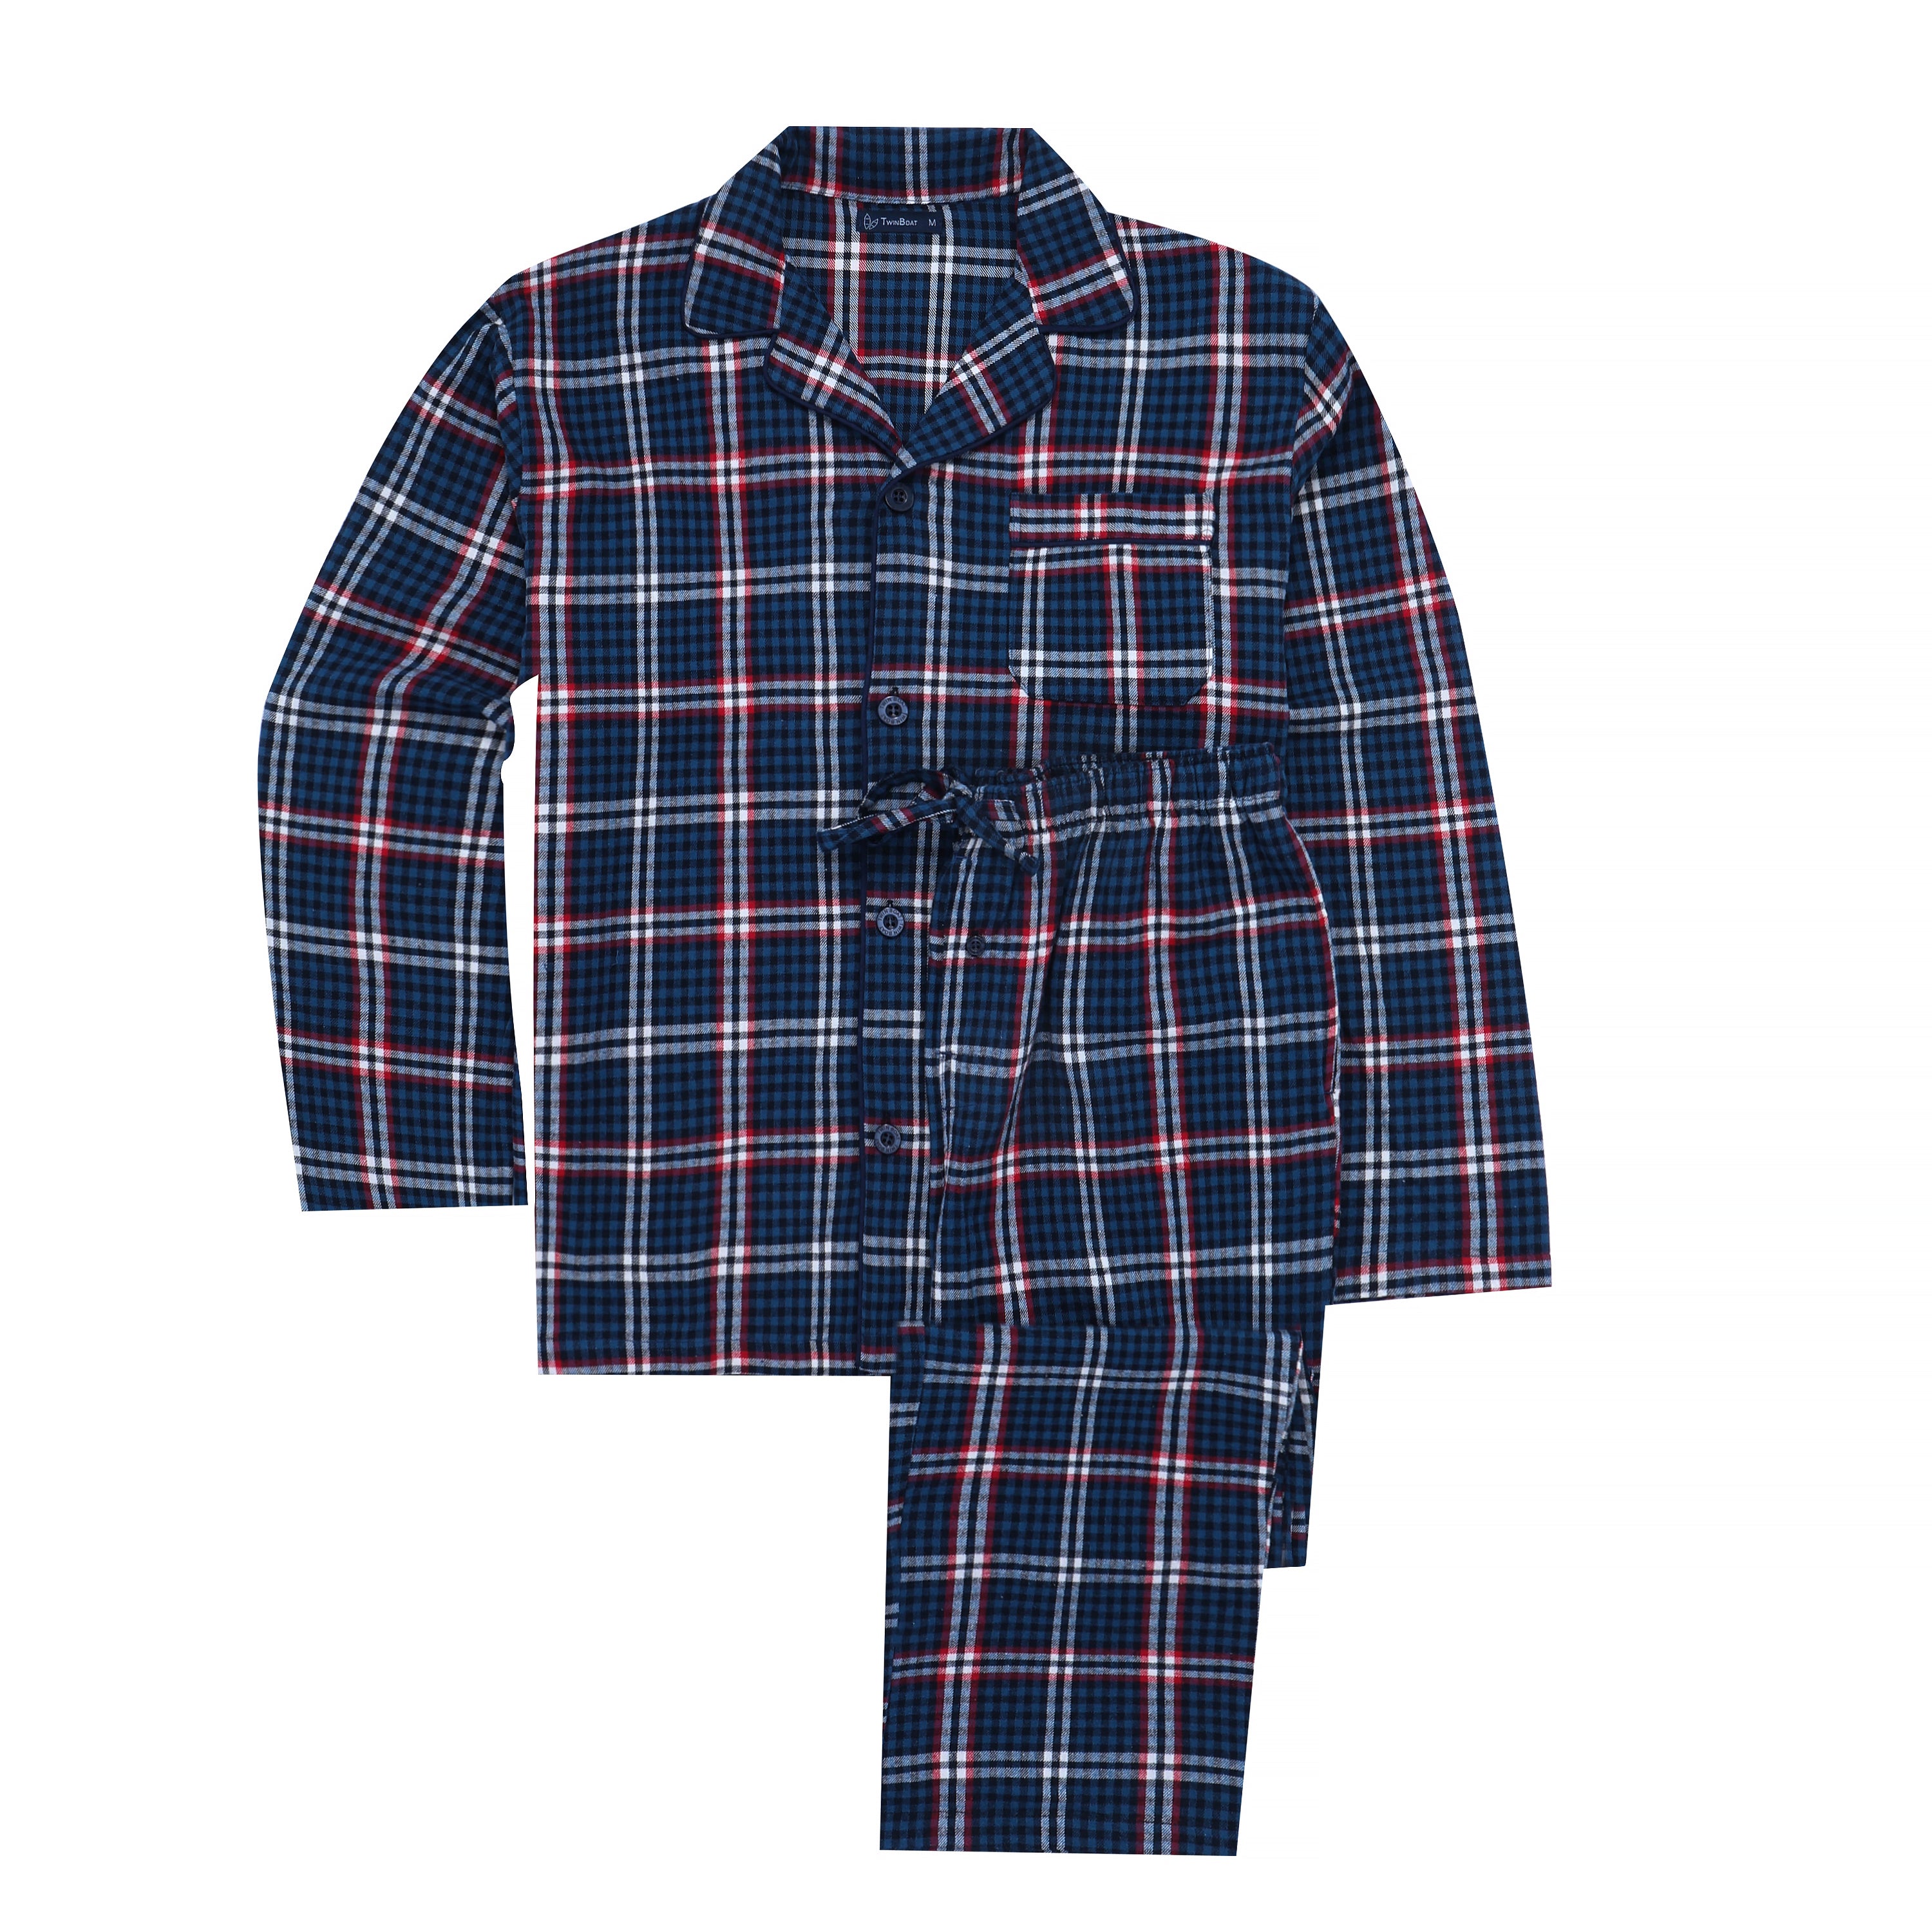 Mens Pajamas Set - 100% Cotton Flannel Pajamas for Men - Gradient Plaid Navy-Blue